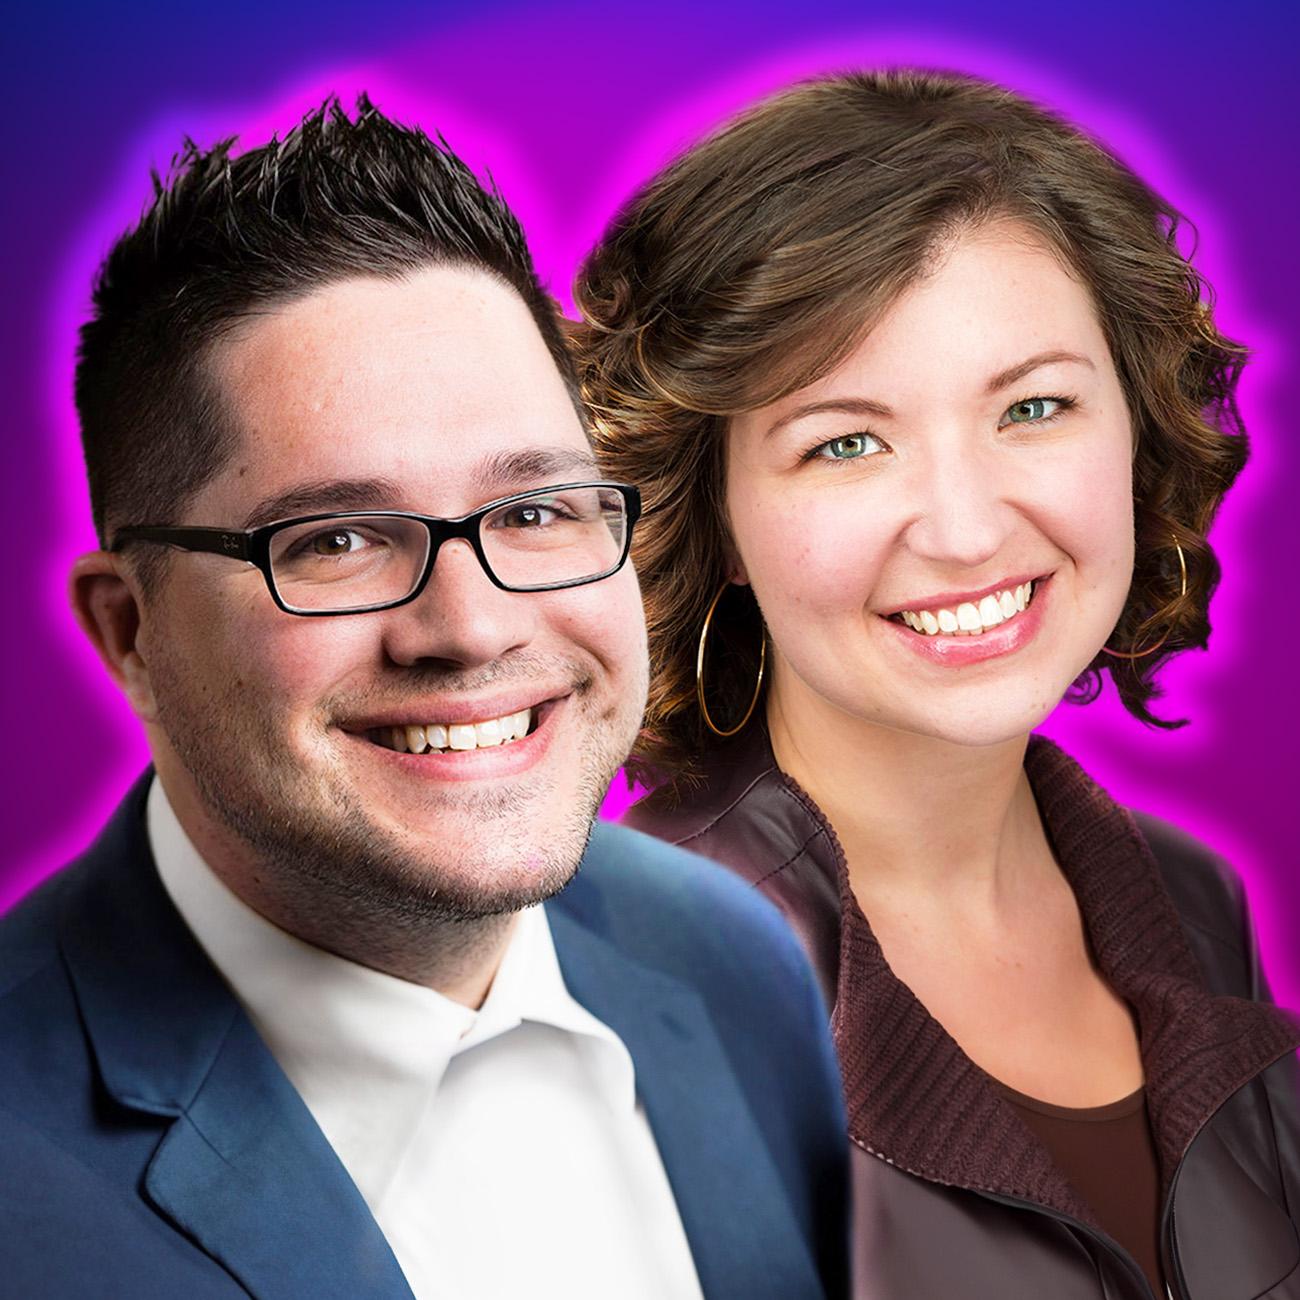 Kim and Jason Coleman plugin.fm guests Freemius podcast